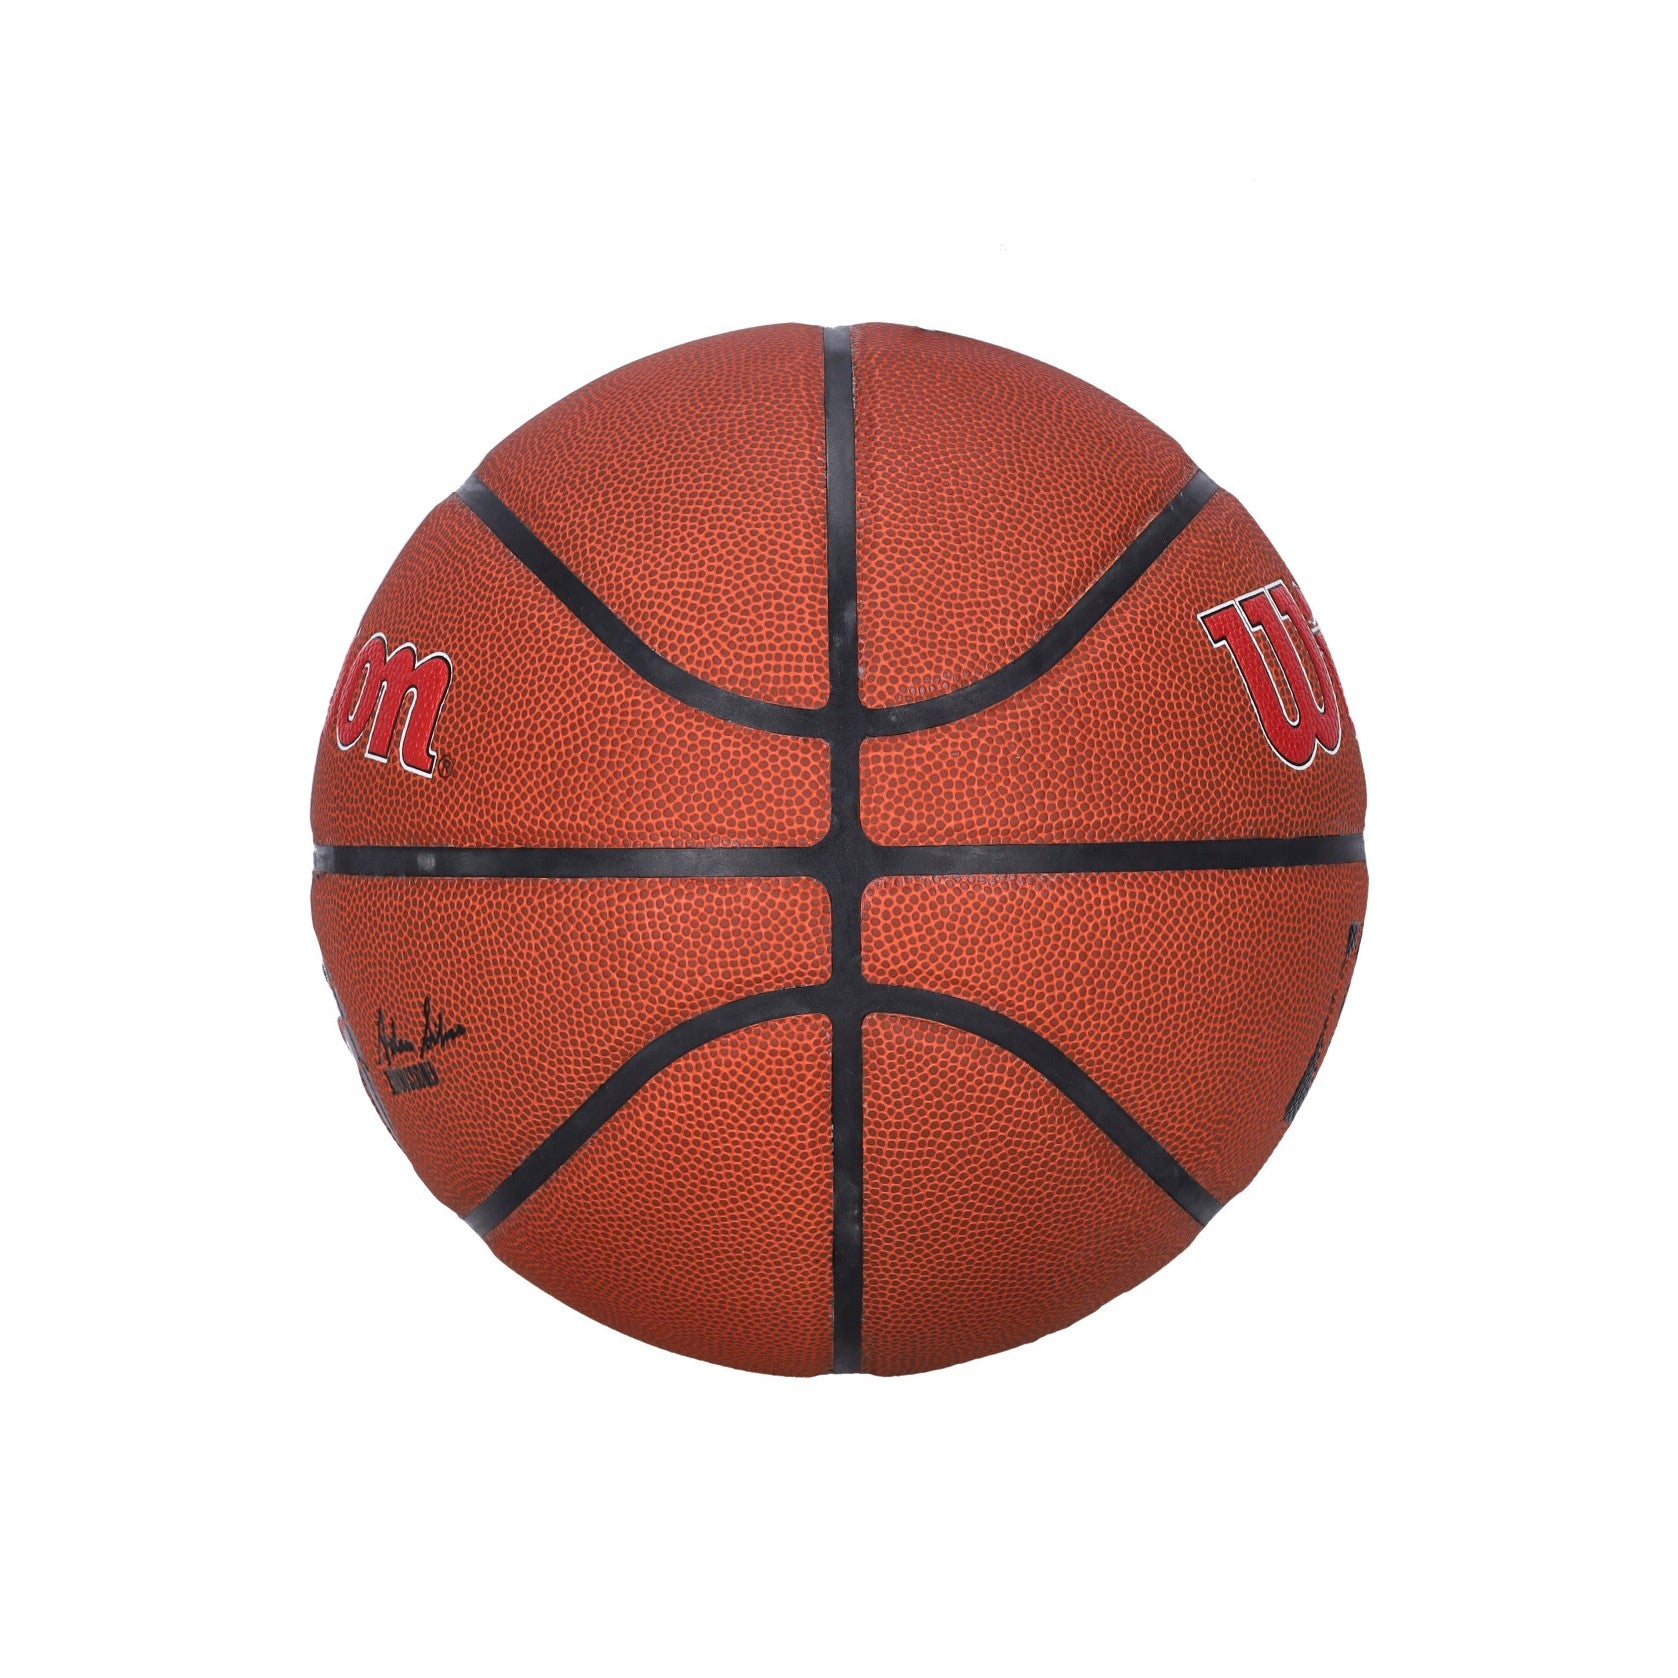 Pallone Uomo Nba Team Alliance Basketball Size 7 Torrap Original Team Colors